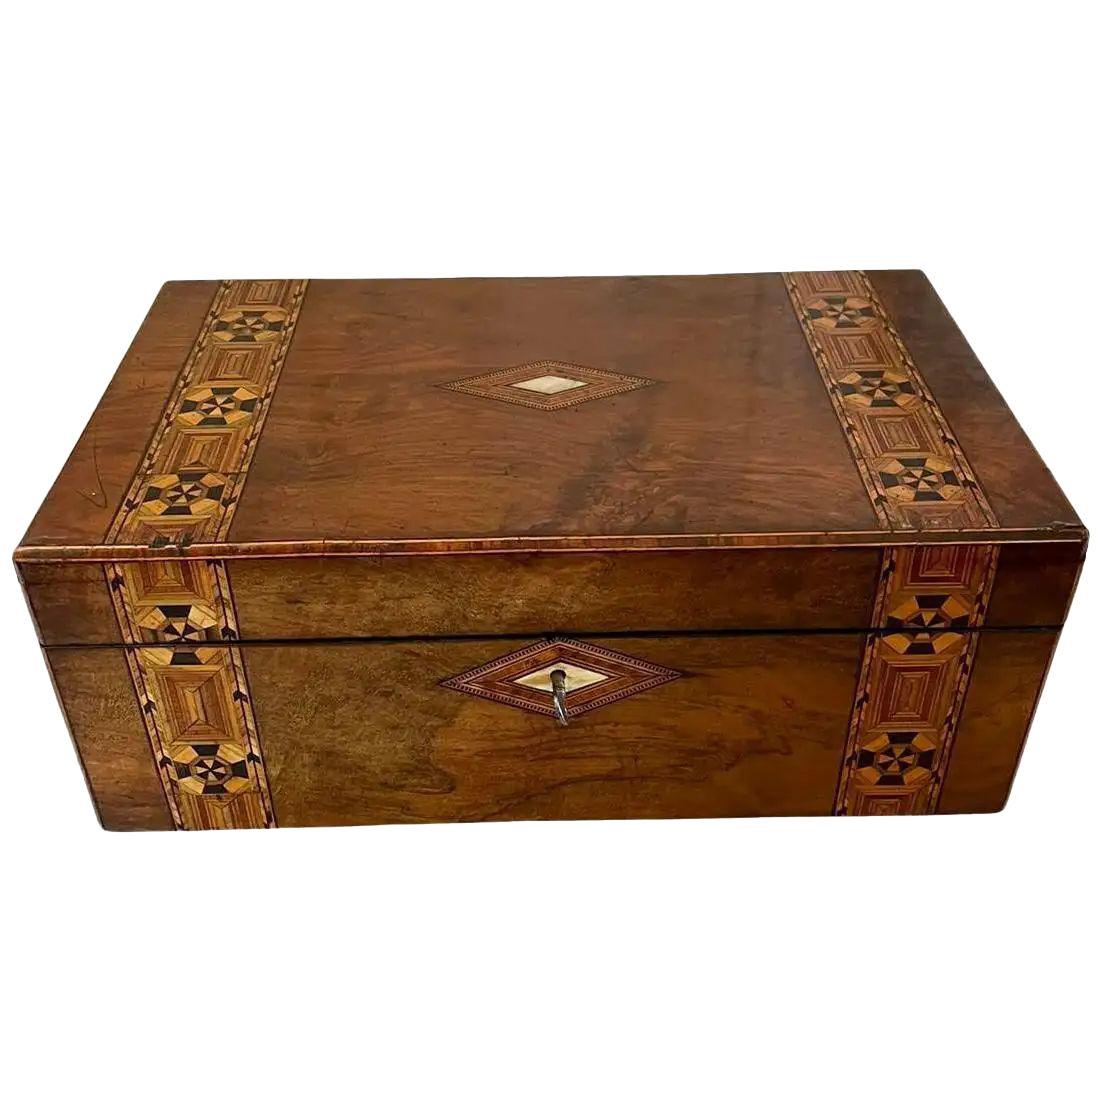 Quality Antique Victorian Burr Walnut Tunbridge Ware Inlay Writing Box